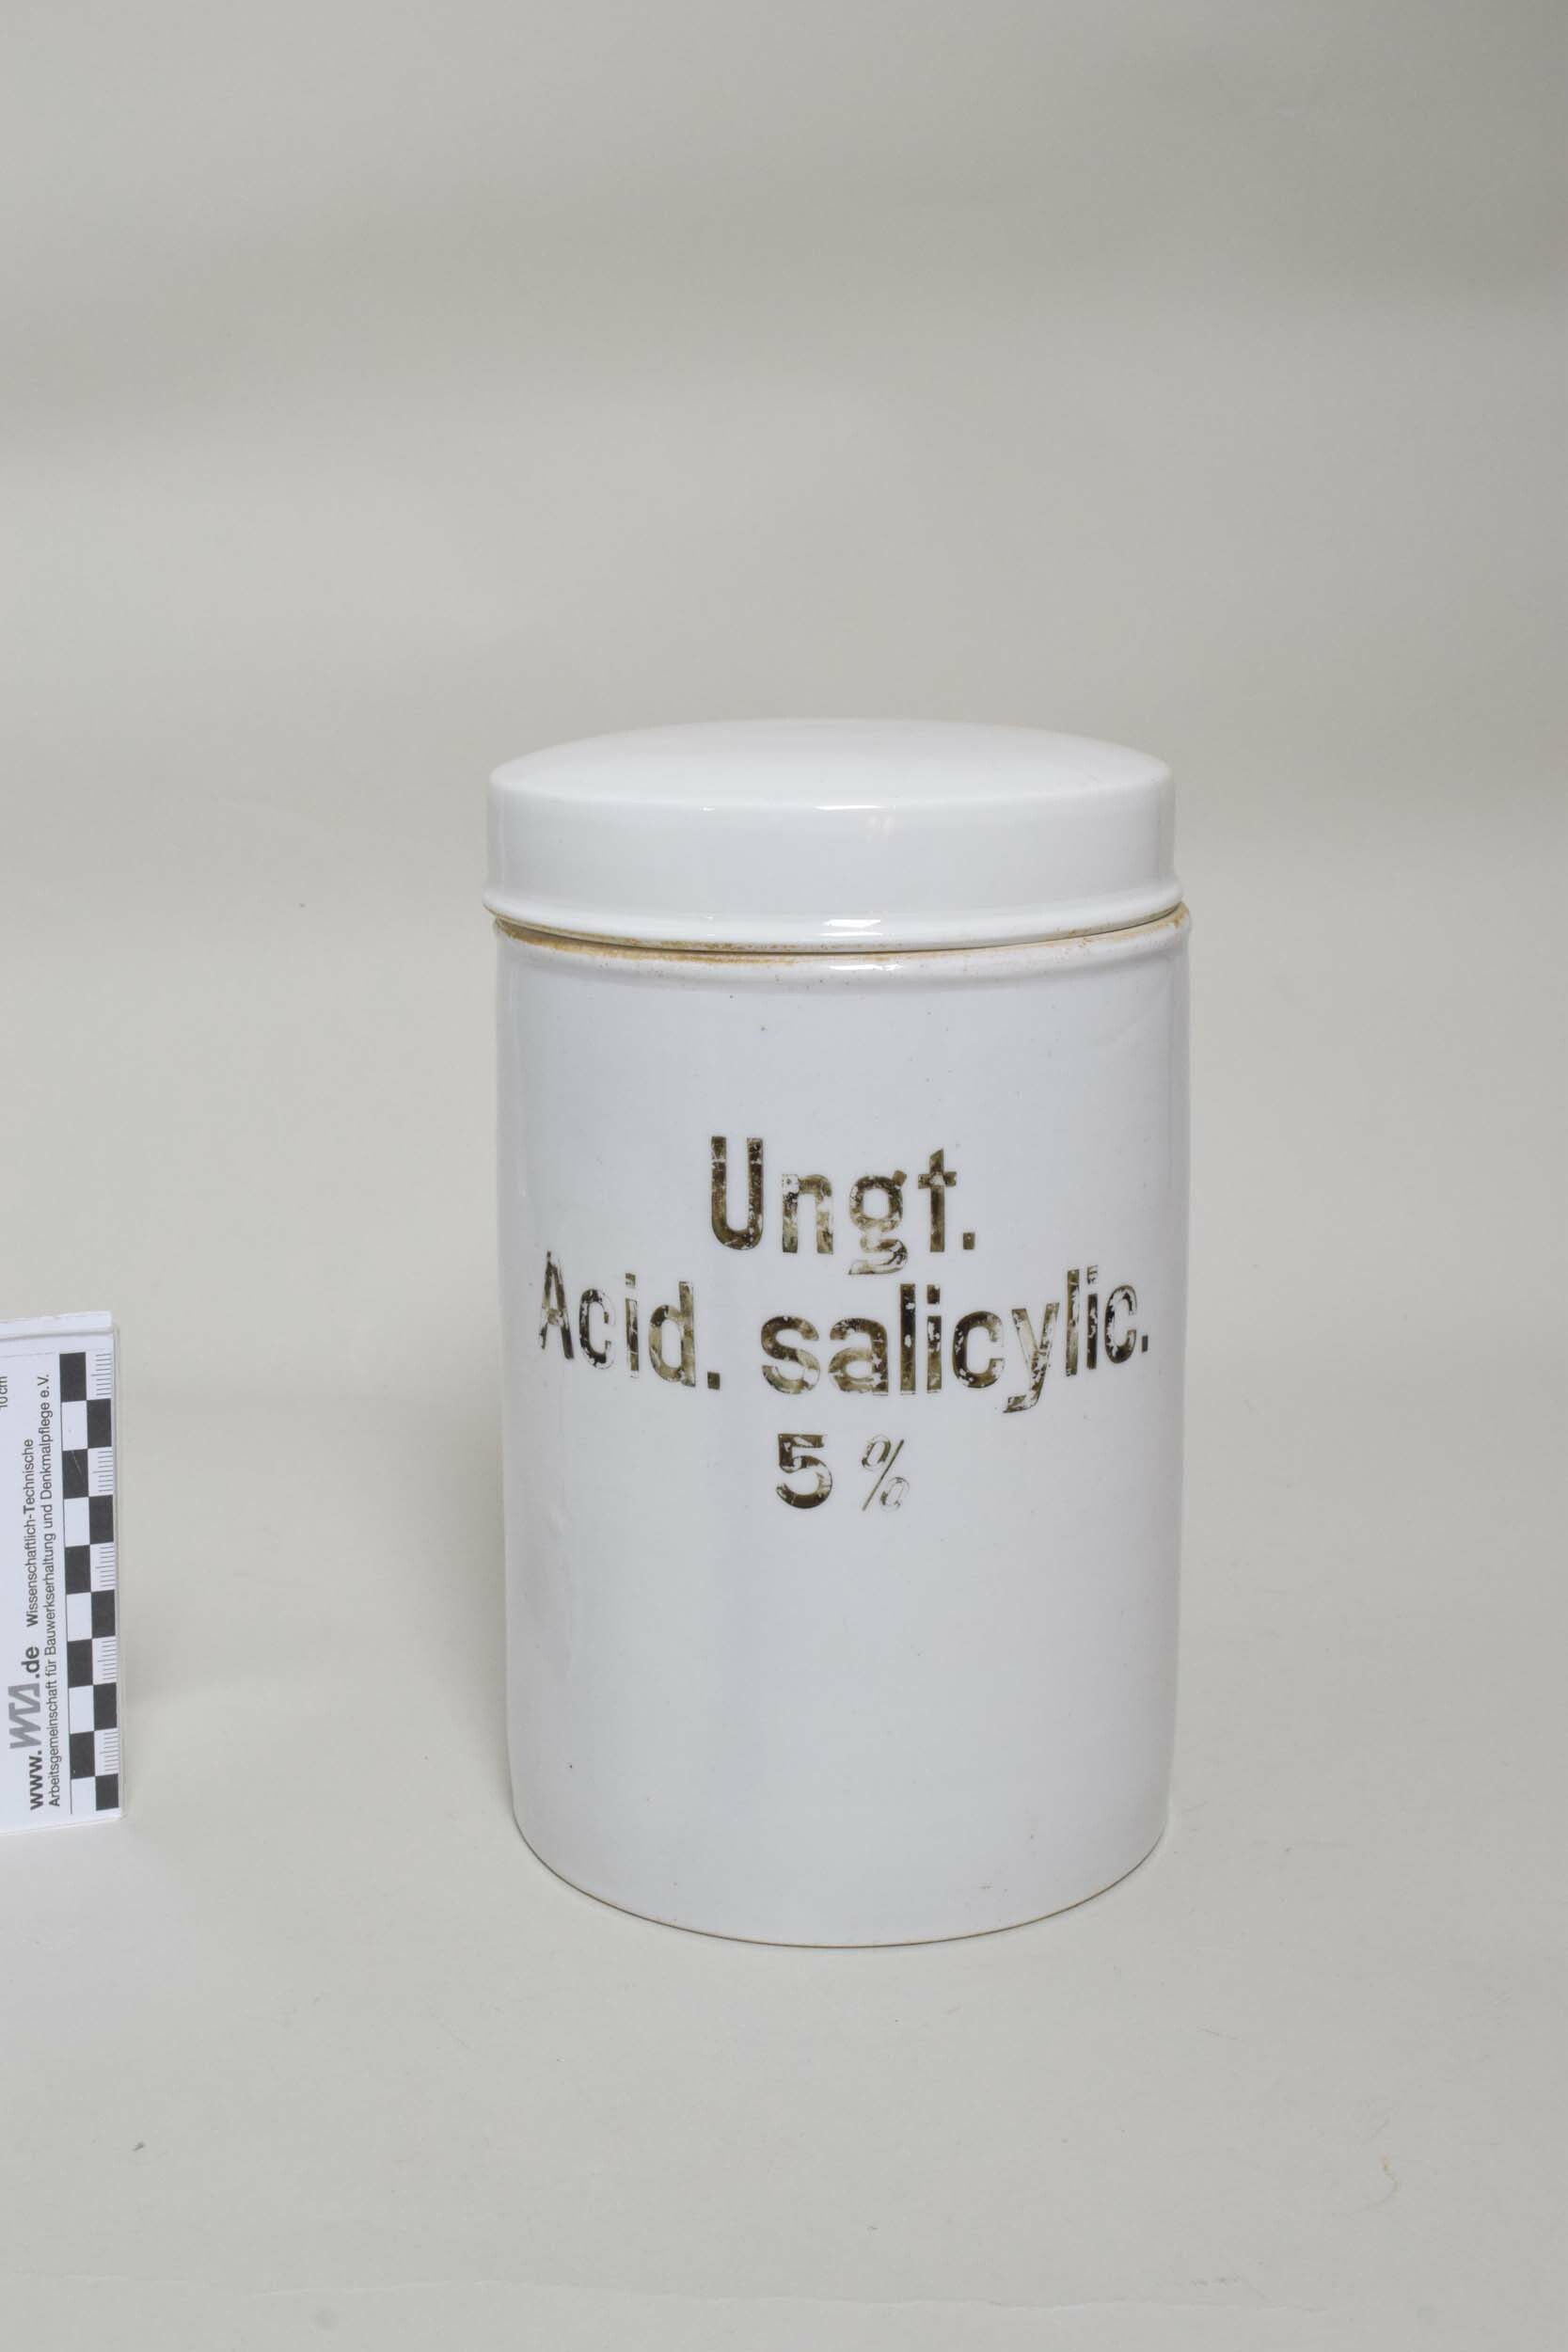 Arzneimitteldose "Ungt.Acid.salicylic. 5%" (Heimatmuseum Dohna CC BY-NC-SA)